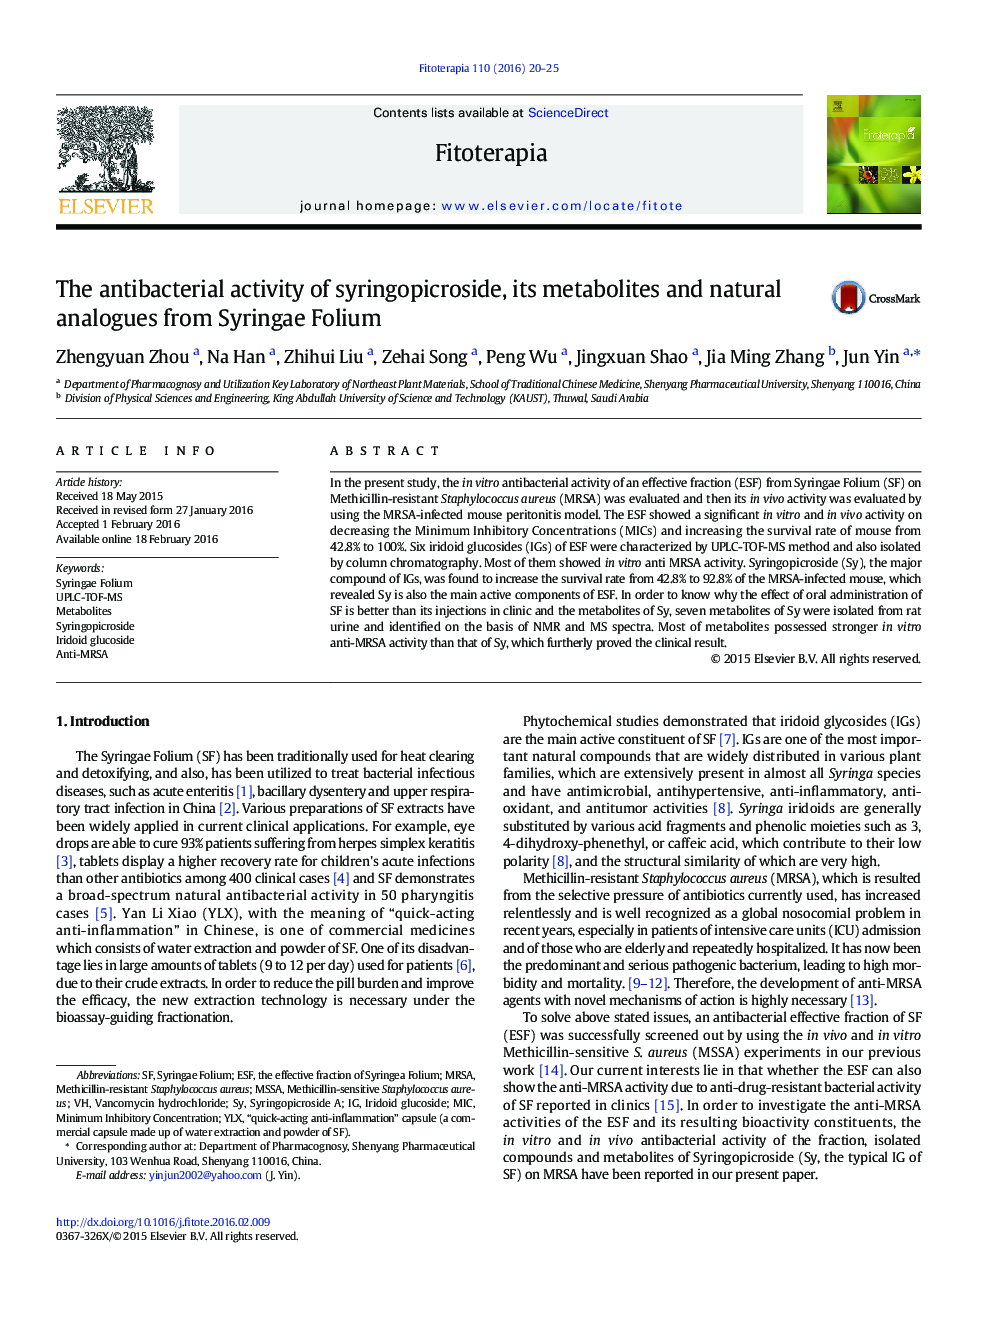 The antibacterial activity of syringopicroside, its metabolites and natural analogues from Syringae Folium